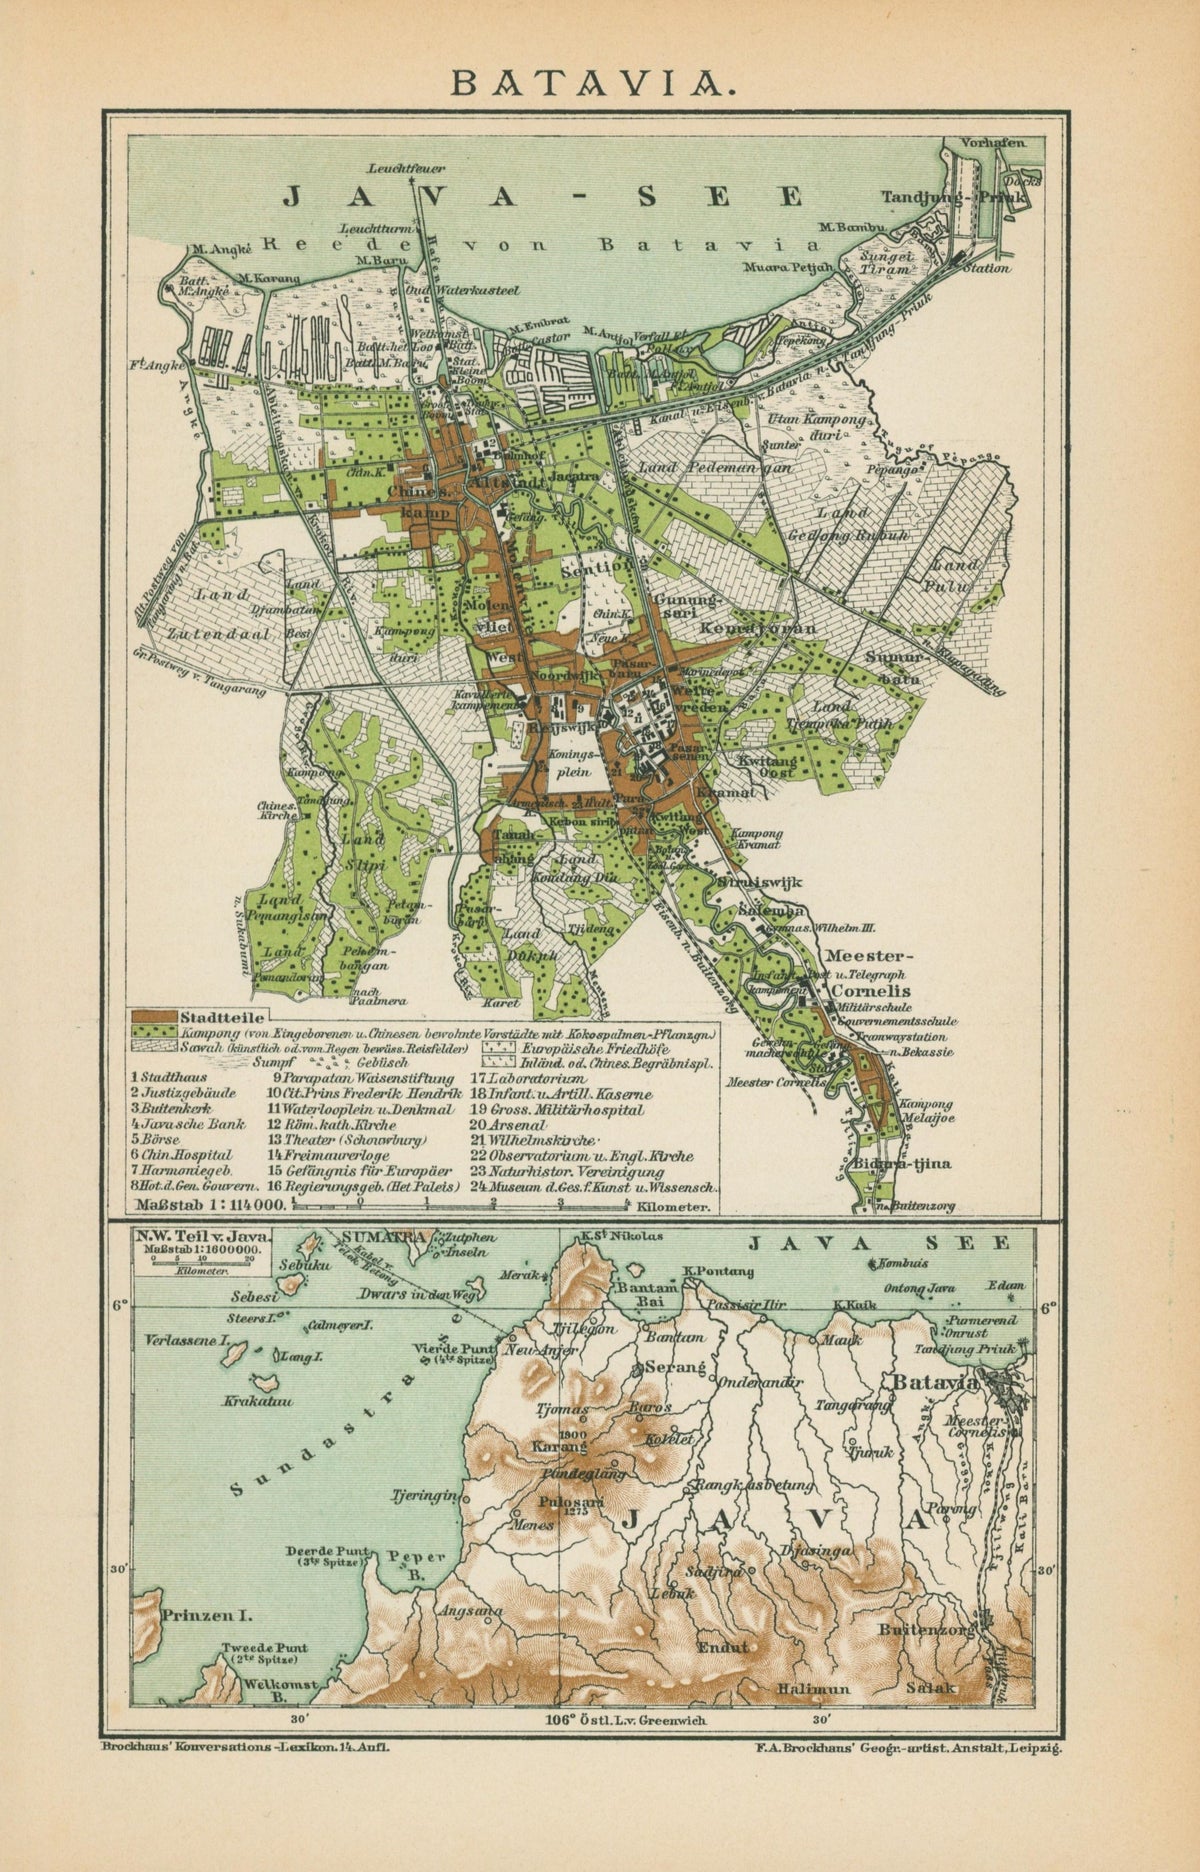 1895 BATAVIA JAKARTA CITY and SUBURBS INDONESIA Antique Map - Authentic Vintage Antique Print